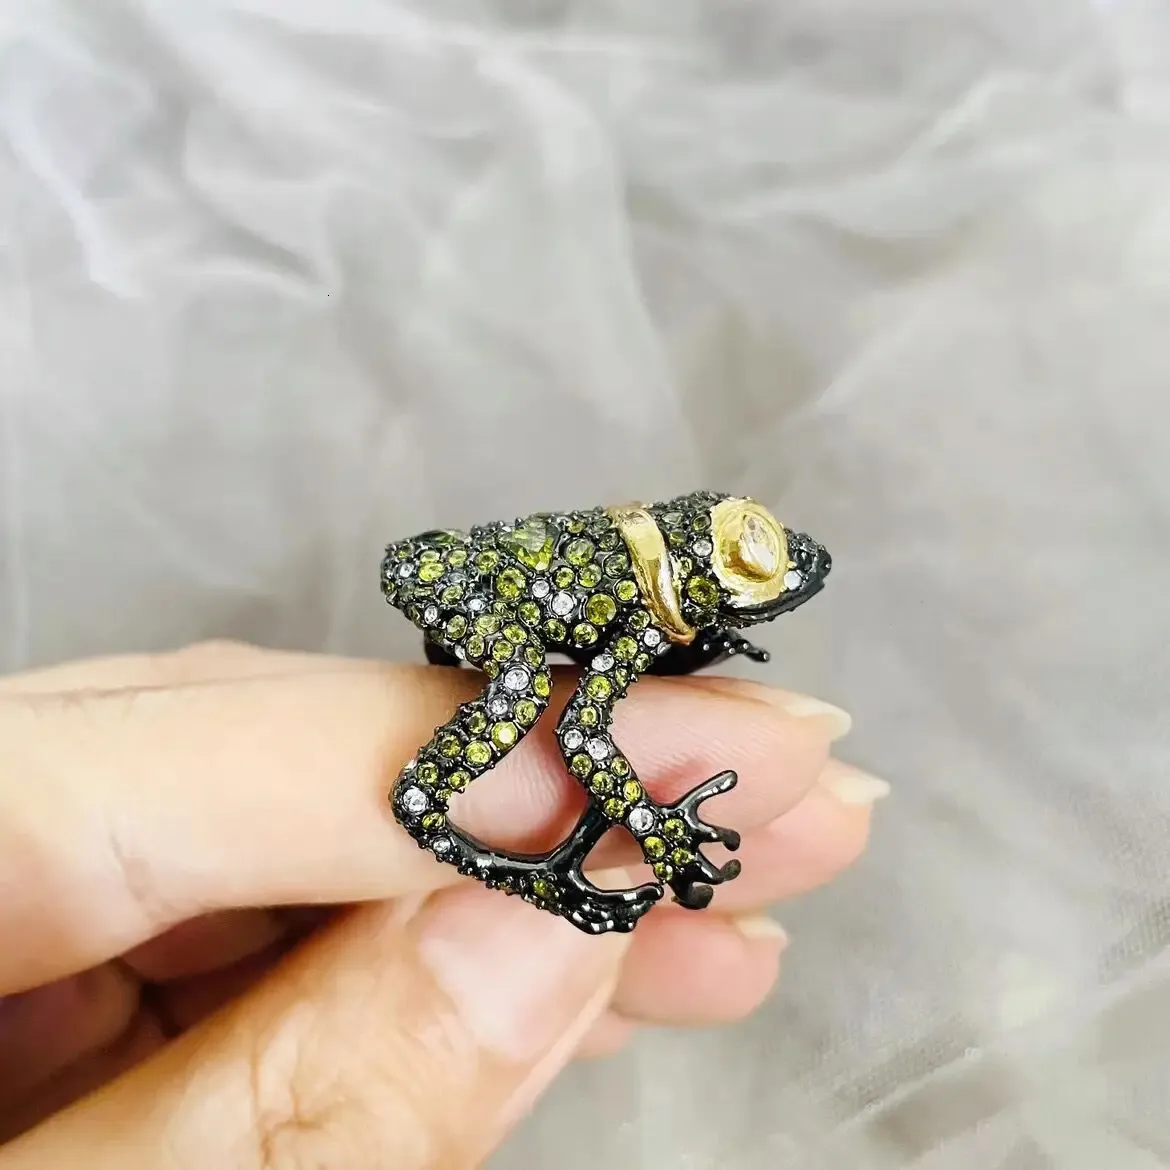 Band Rings Ring Fashion Personality Light Luxury Frog Gift Rings Anillos Rings For Women Men Envio Gratis Todo Stainless Steel Gratis 231222